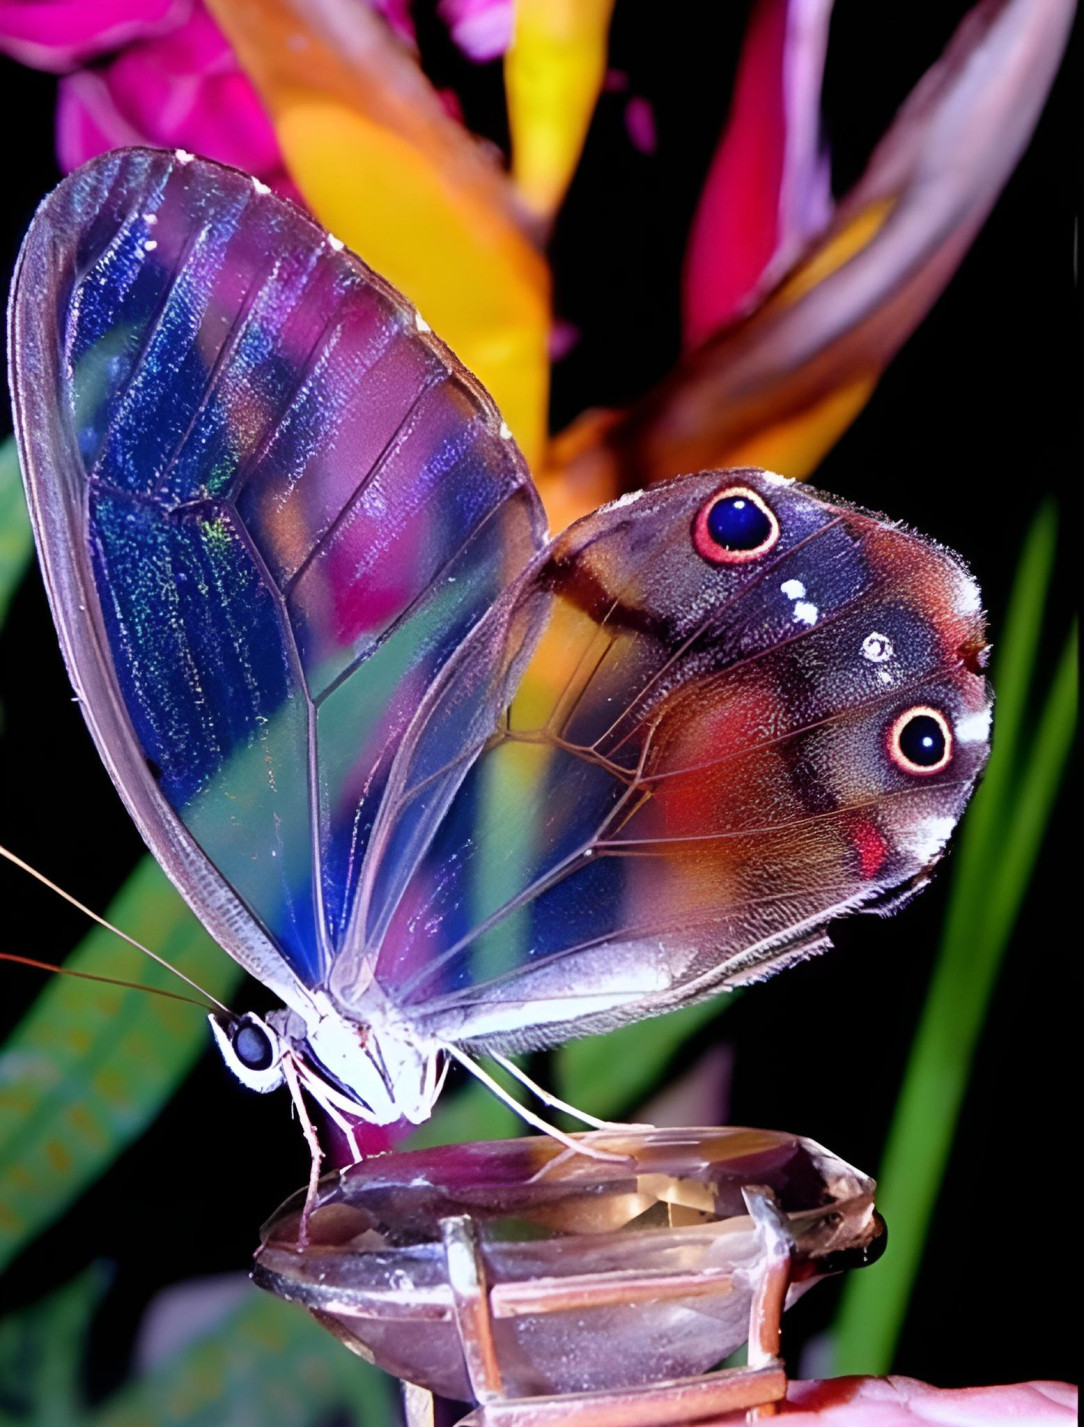 The Glasswing Phantom Butterfly